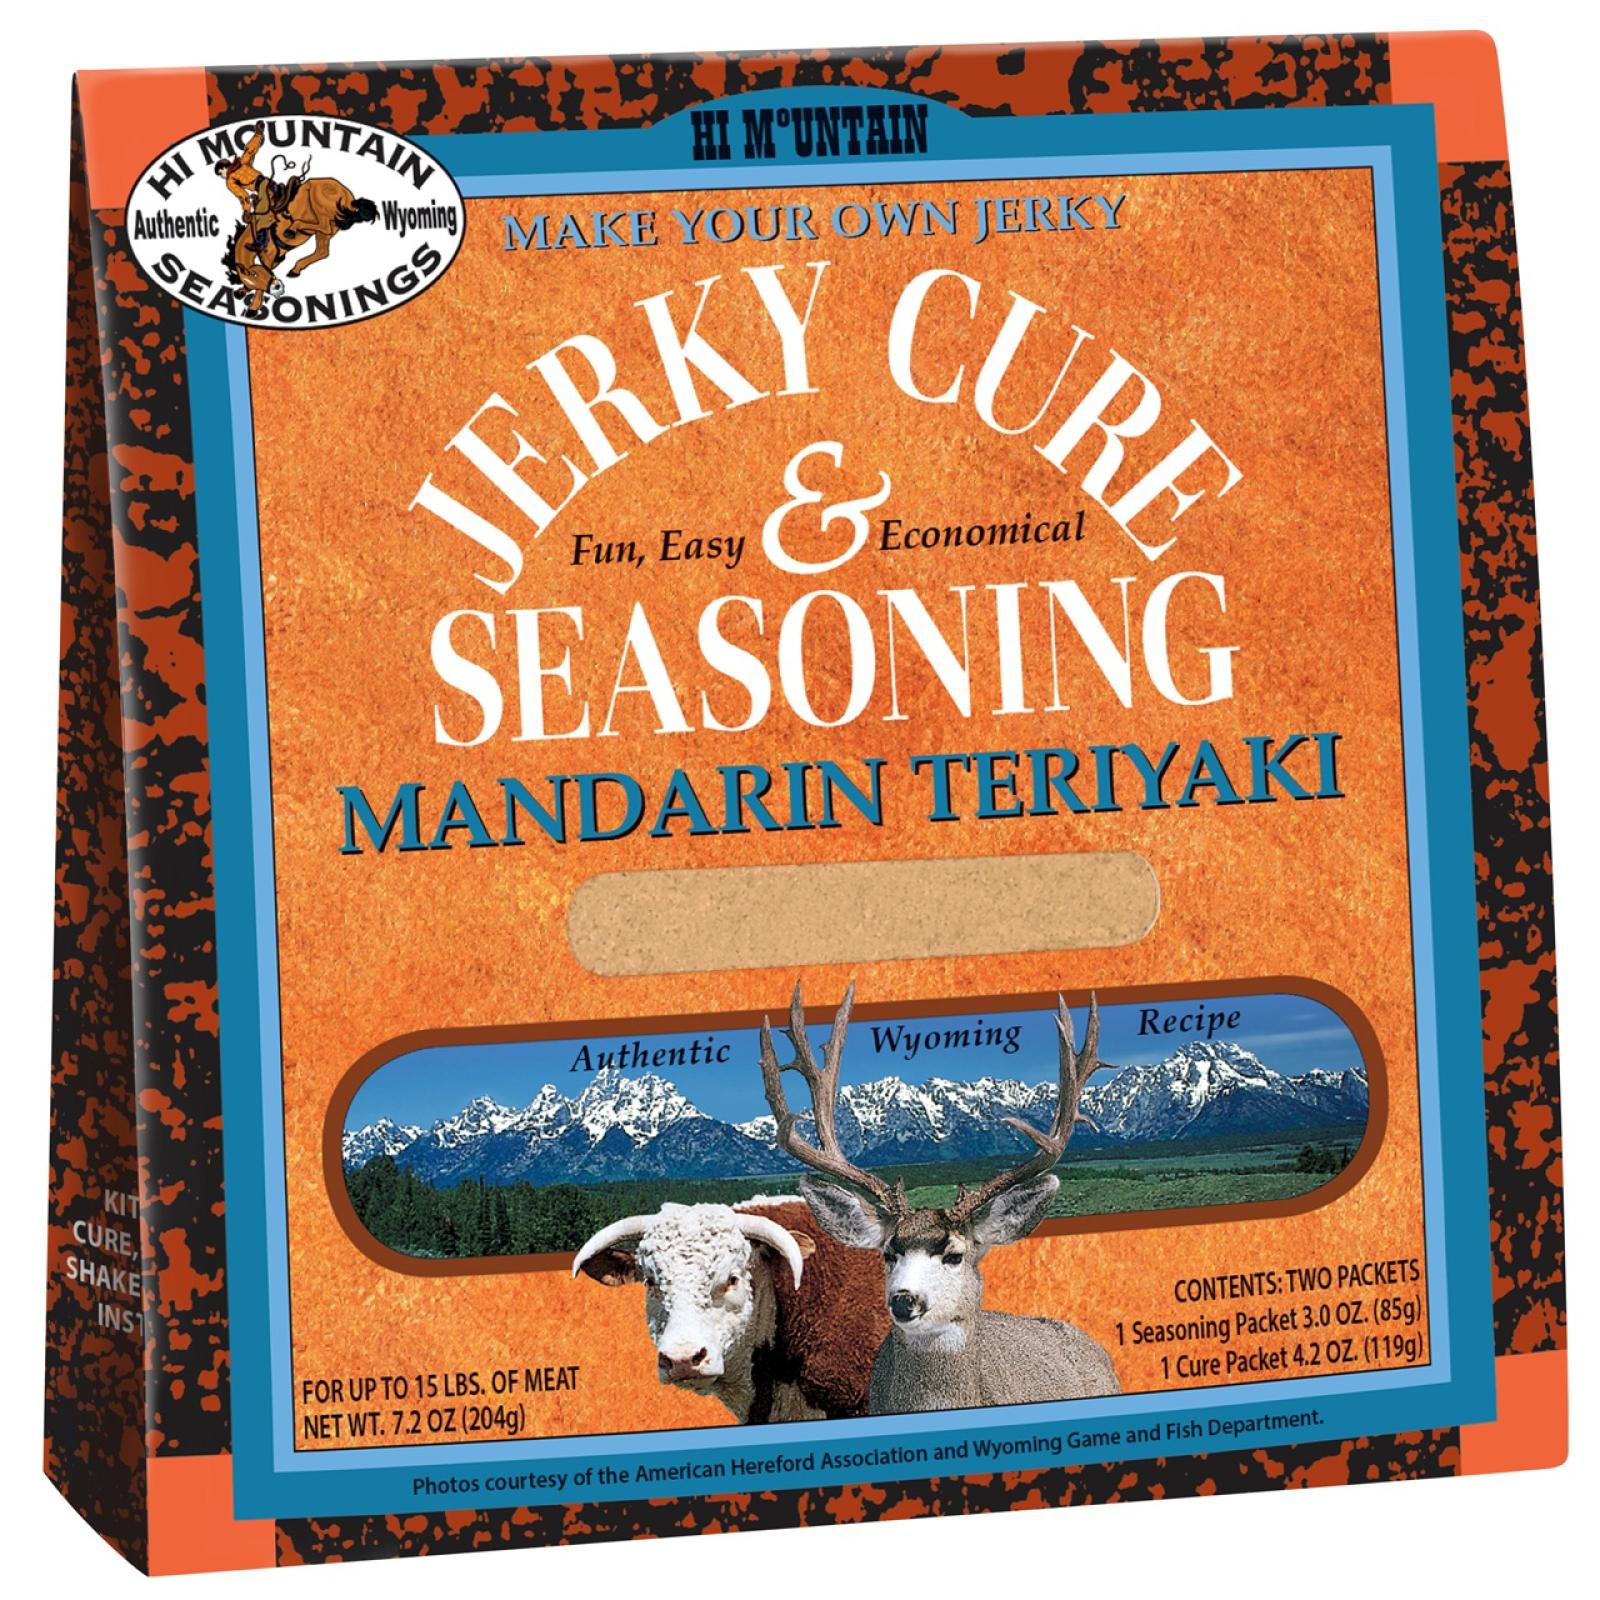 Hi Mountain Mandarin Teriyaki Blend Jerky Kit